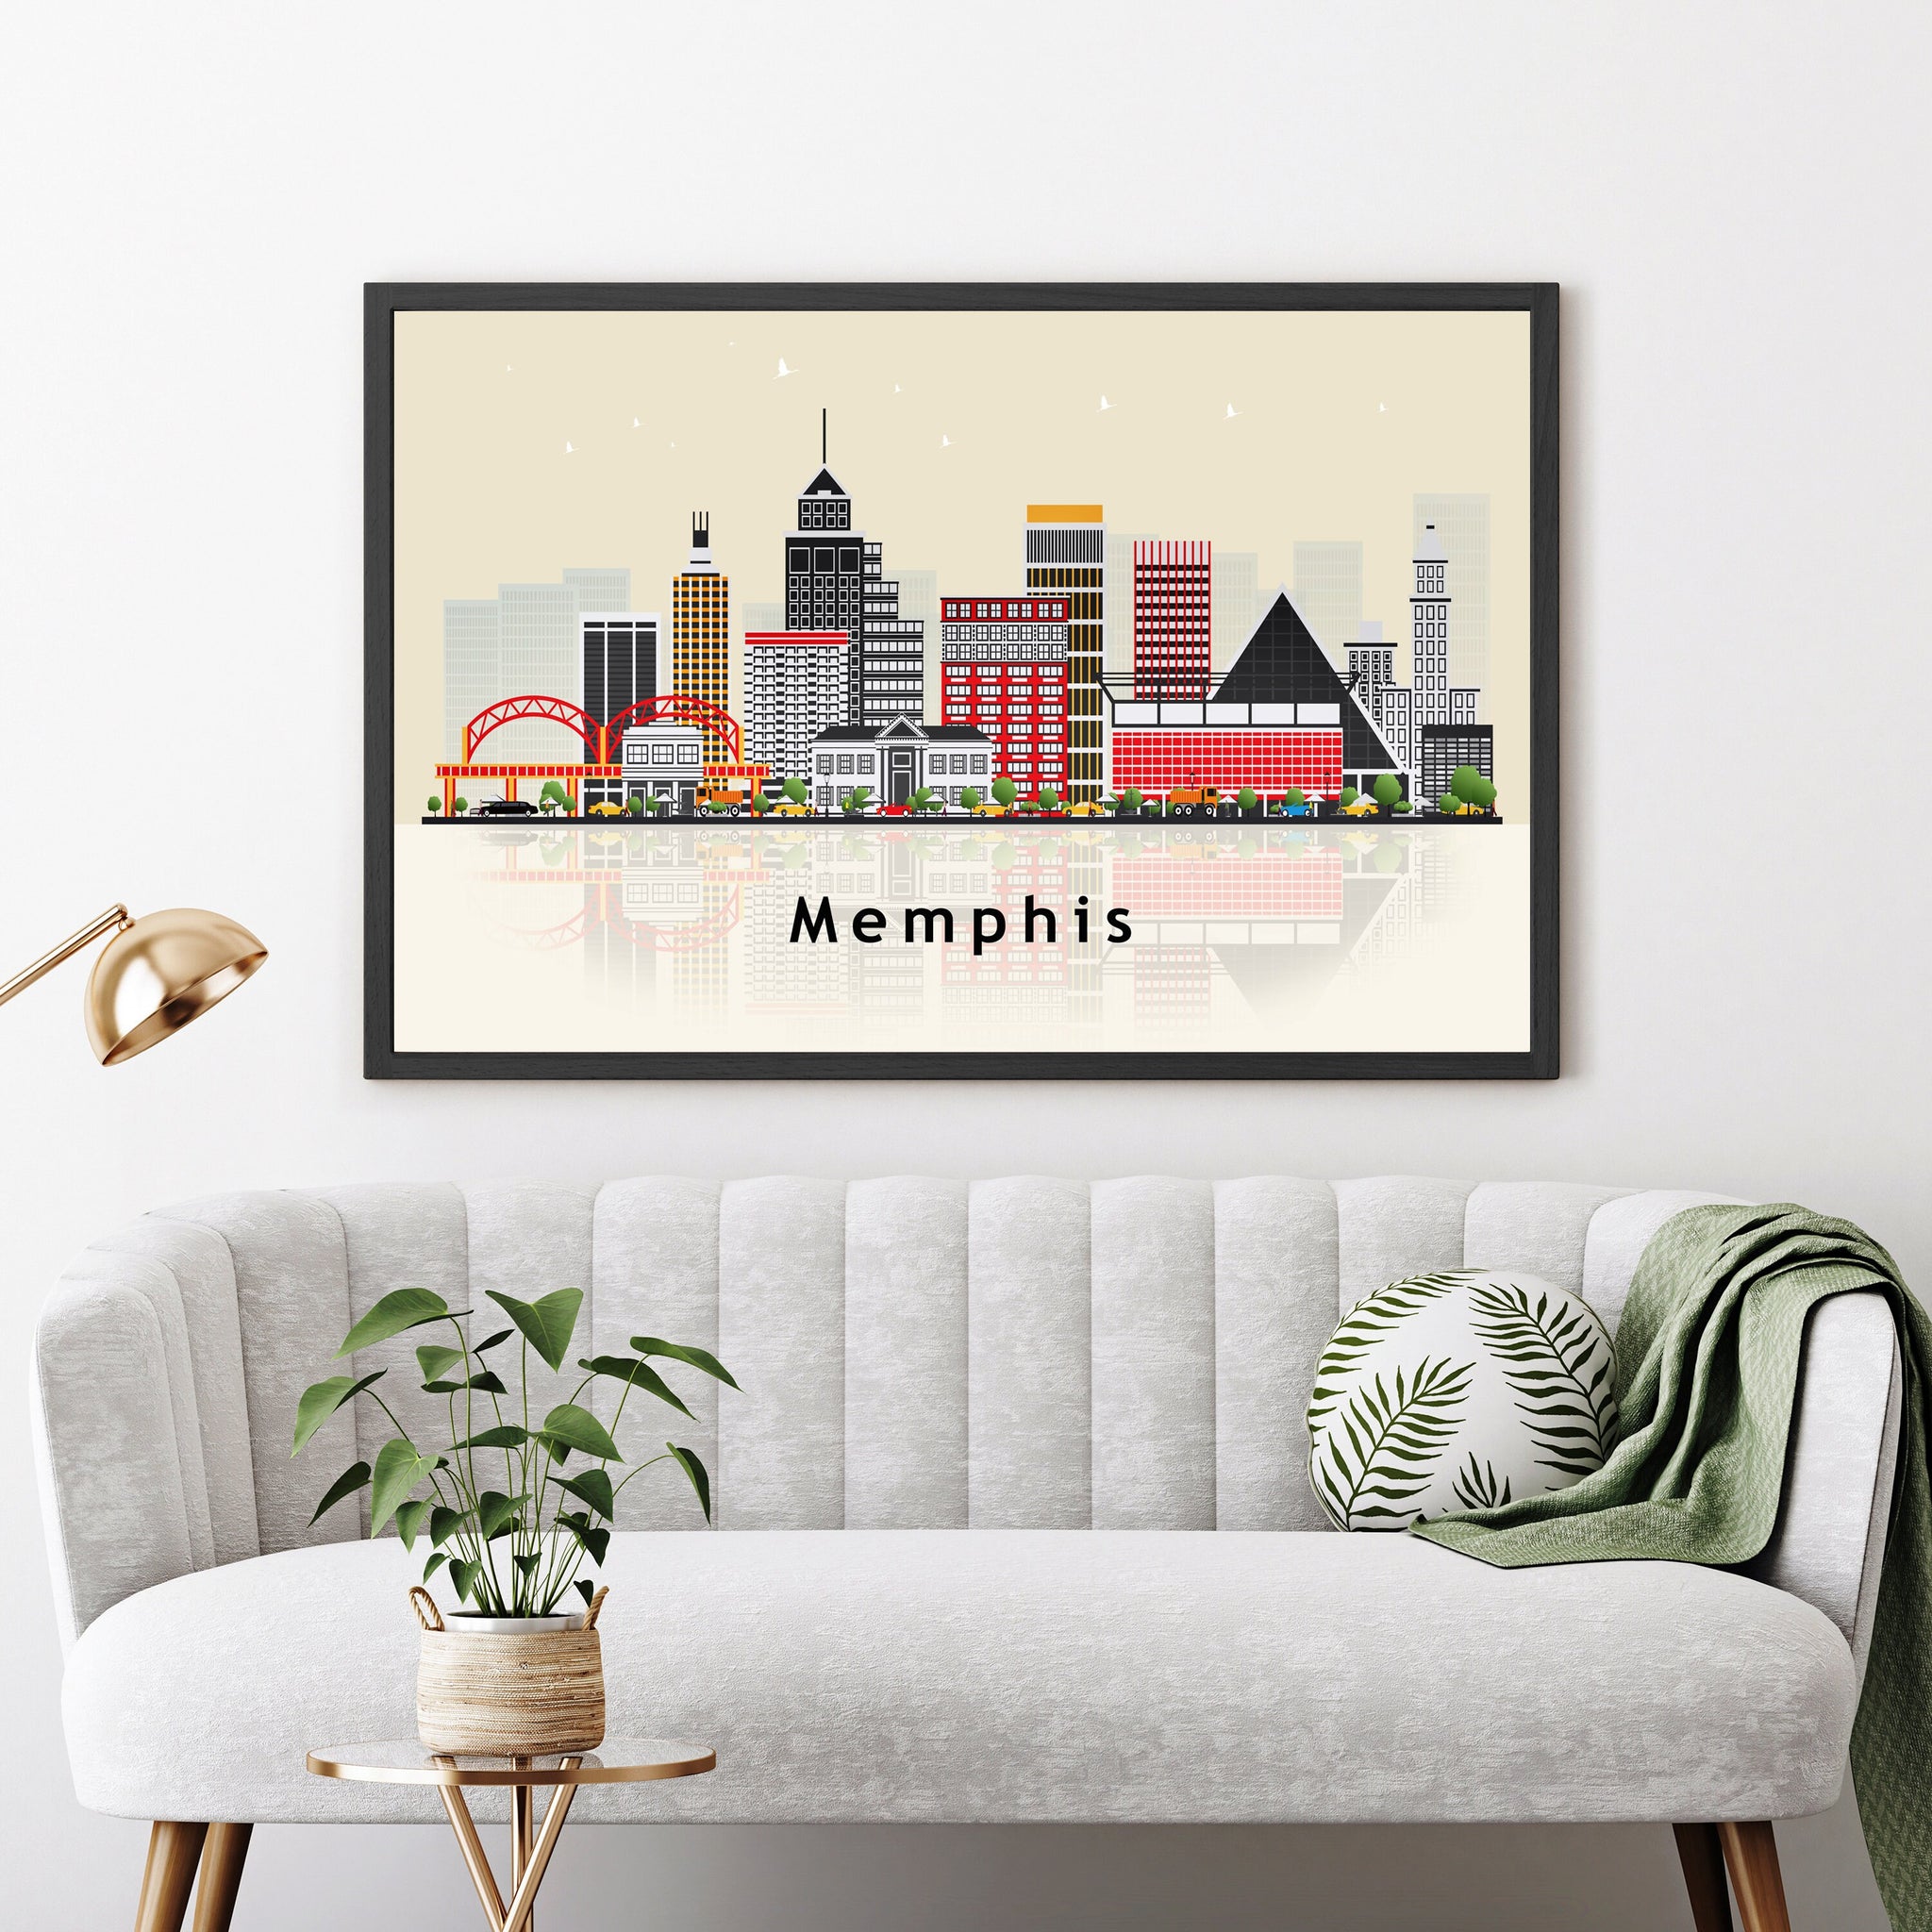 MEMPHIS TENNESSEE Illustration skyline poster, Memphis state modern skyline cityscape poster print, Landmark home wall art decoration poster